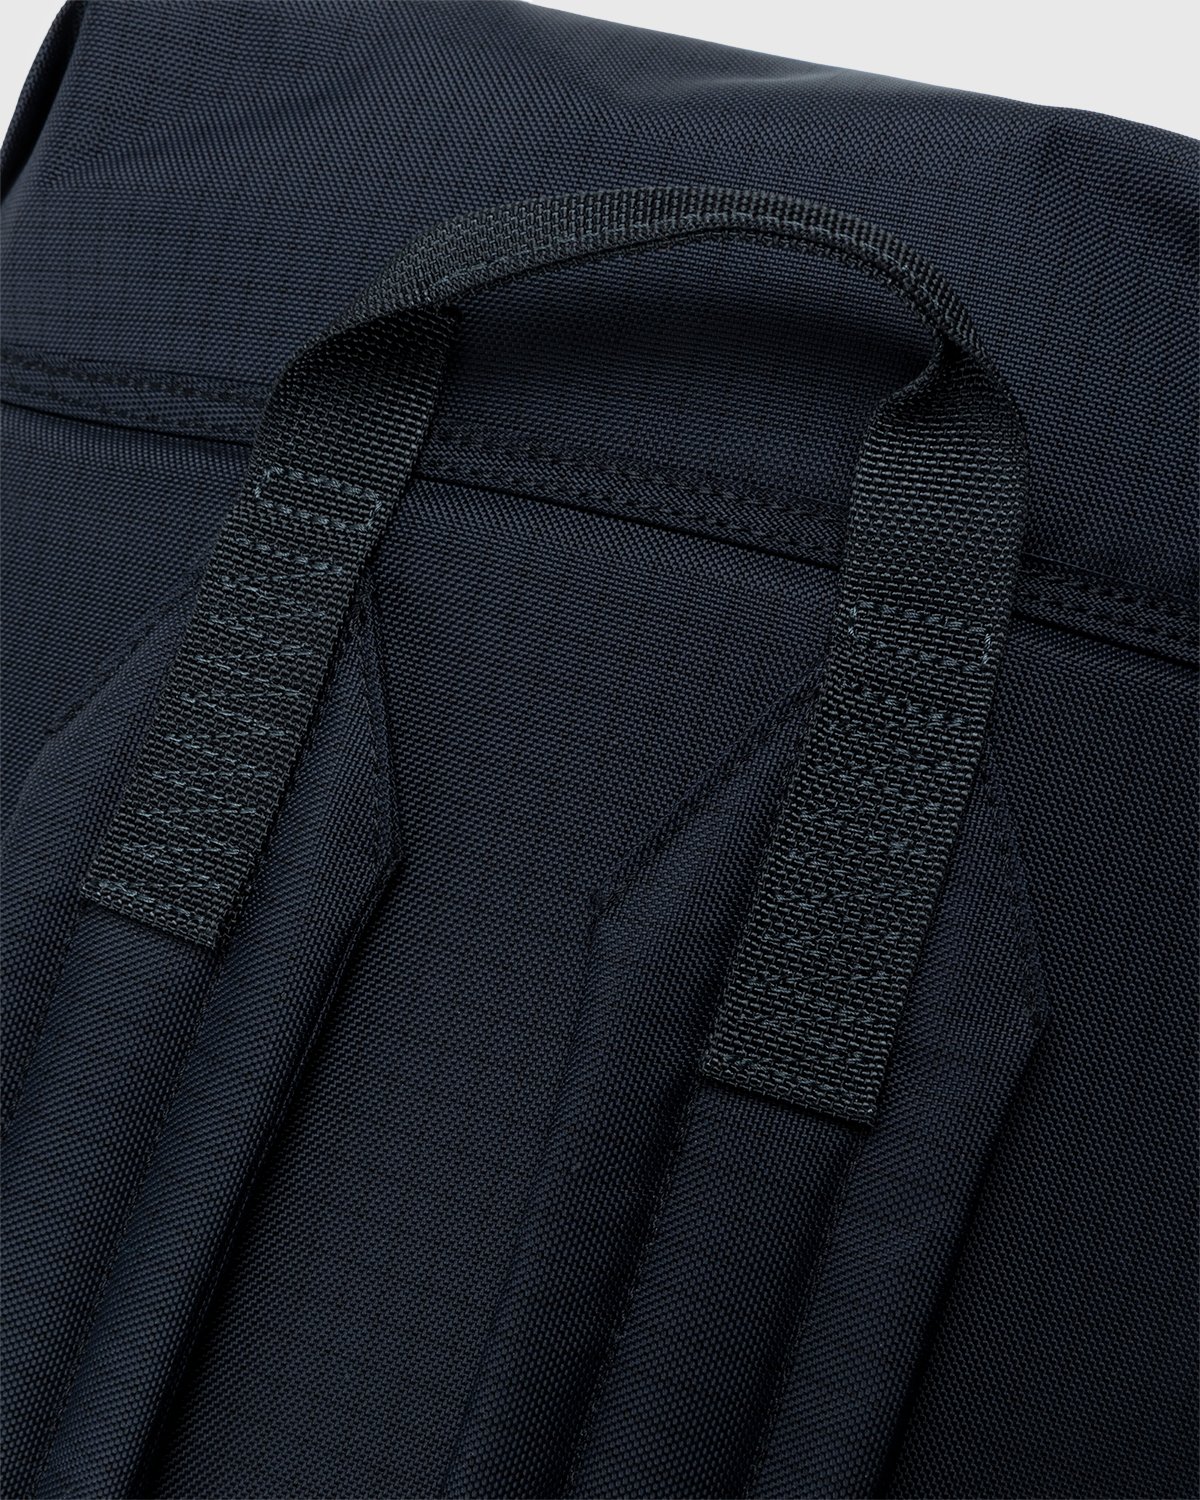 Acne Studios - Large Ripstop Backpack Black/Khaki Green - Accessories - Black - Image 6